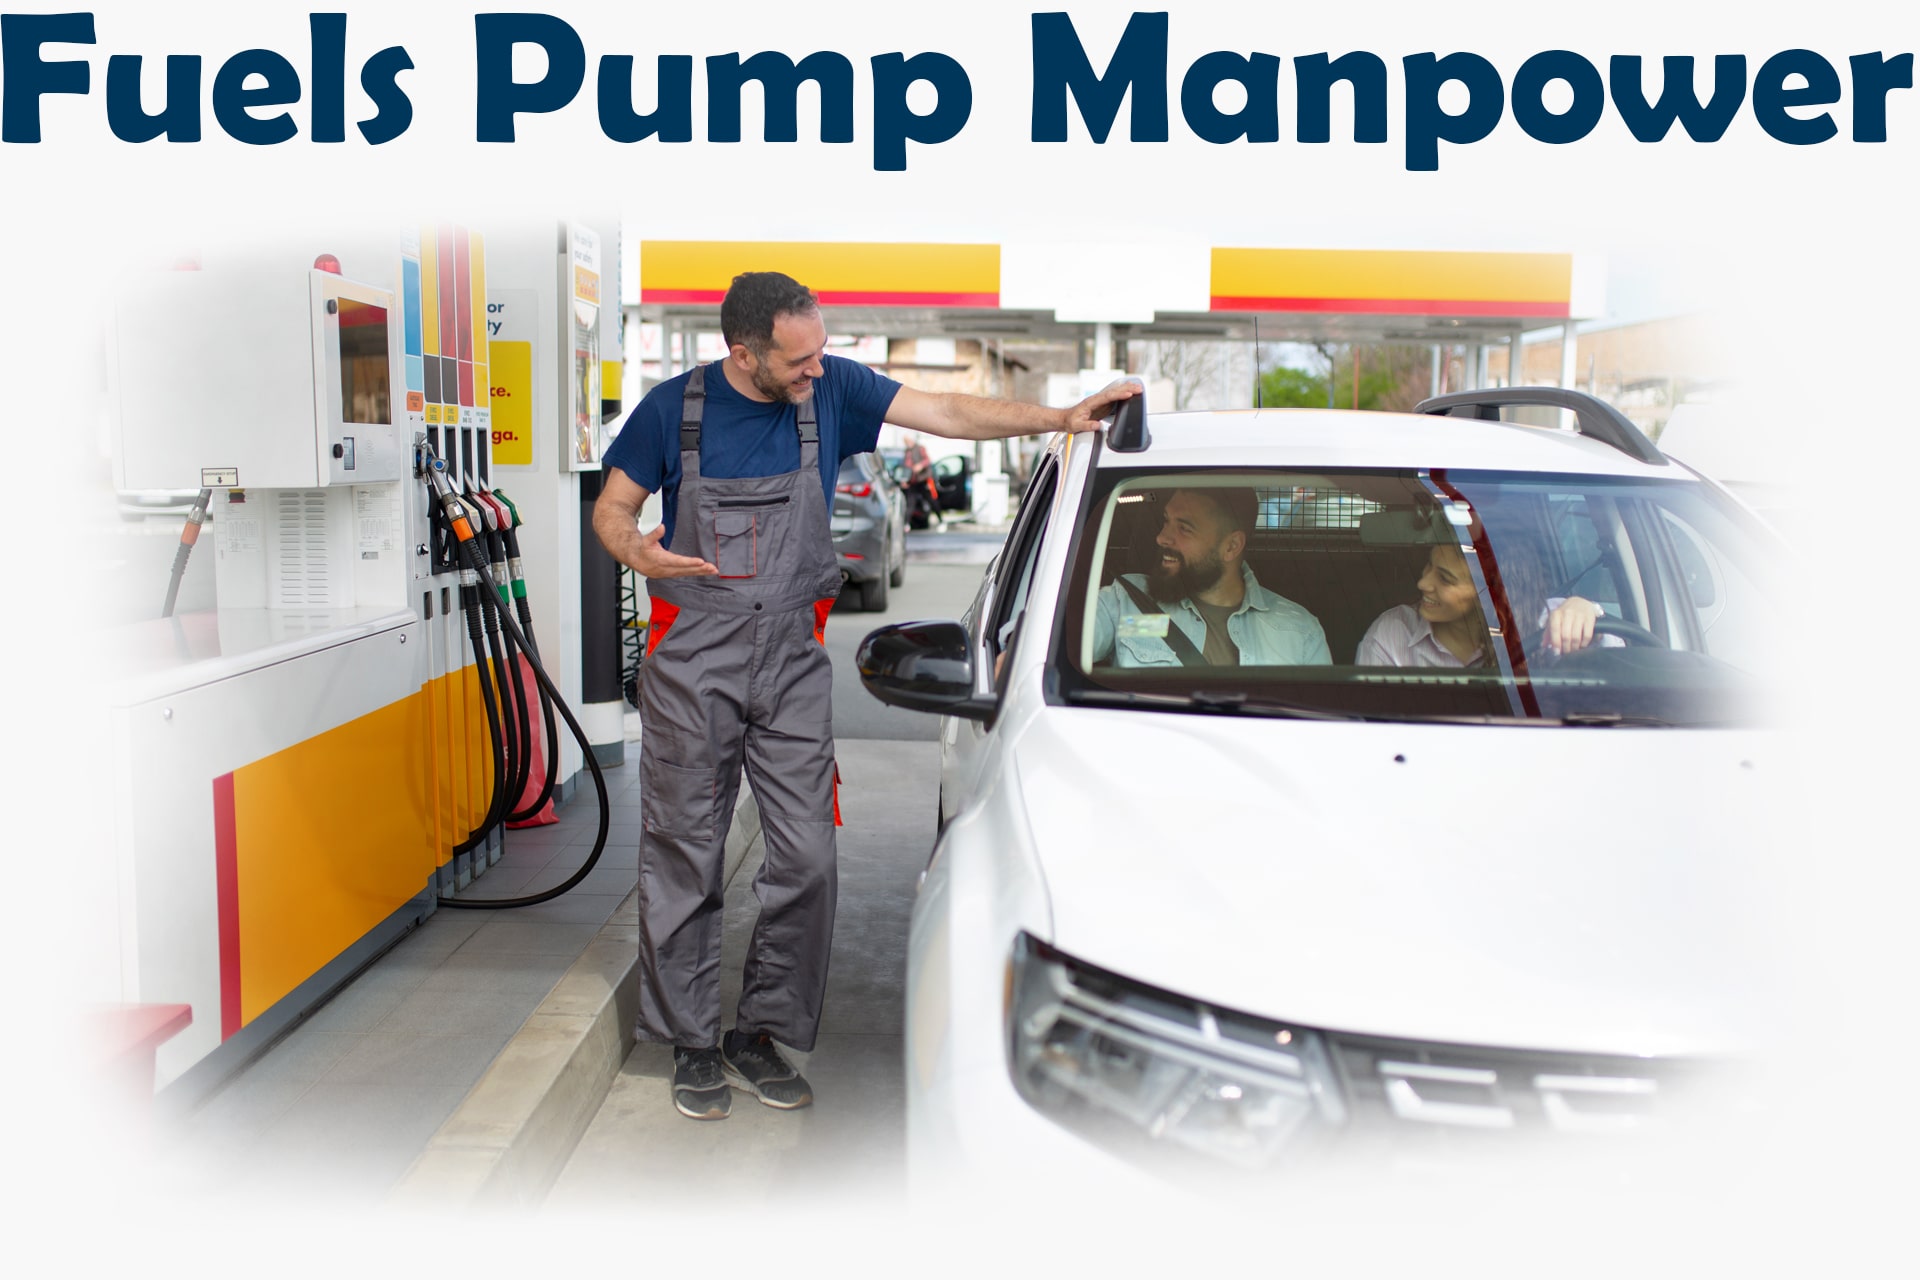 Fuels Pump Manpower Services